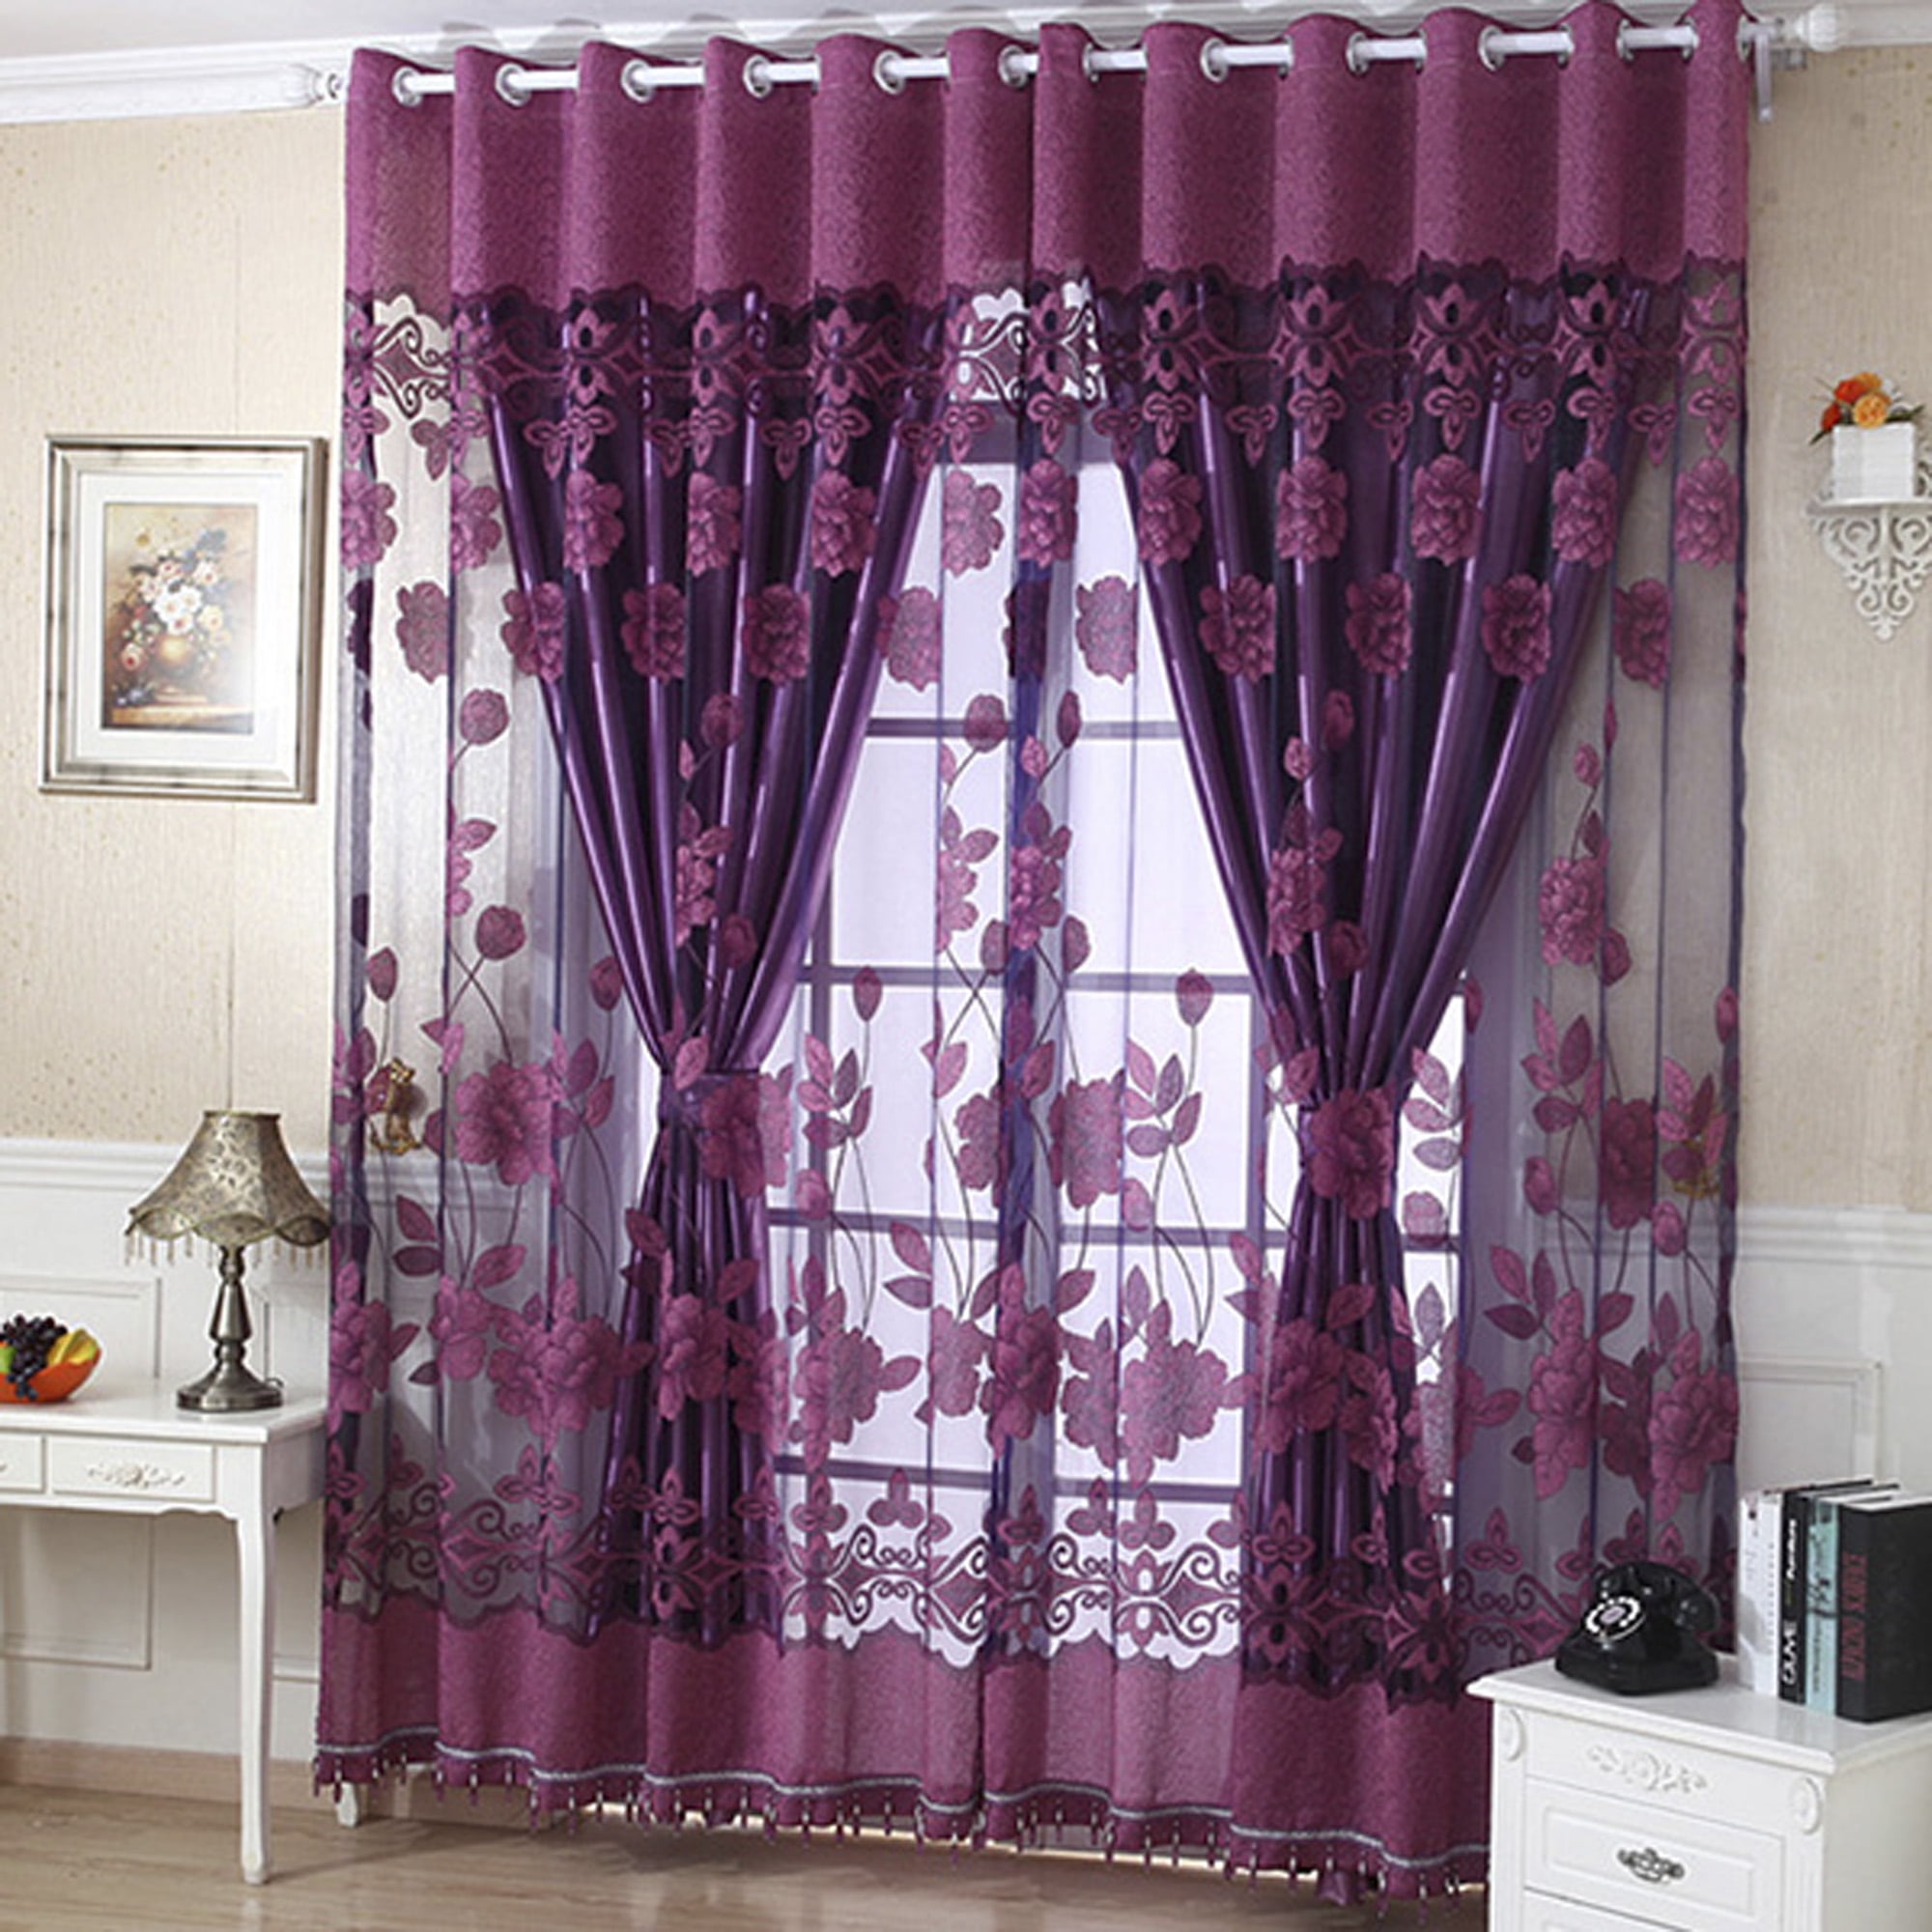 Floral Room Door Sheer Voile Window Valances Panel Drape Curtain Tulle Scarfs 